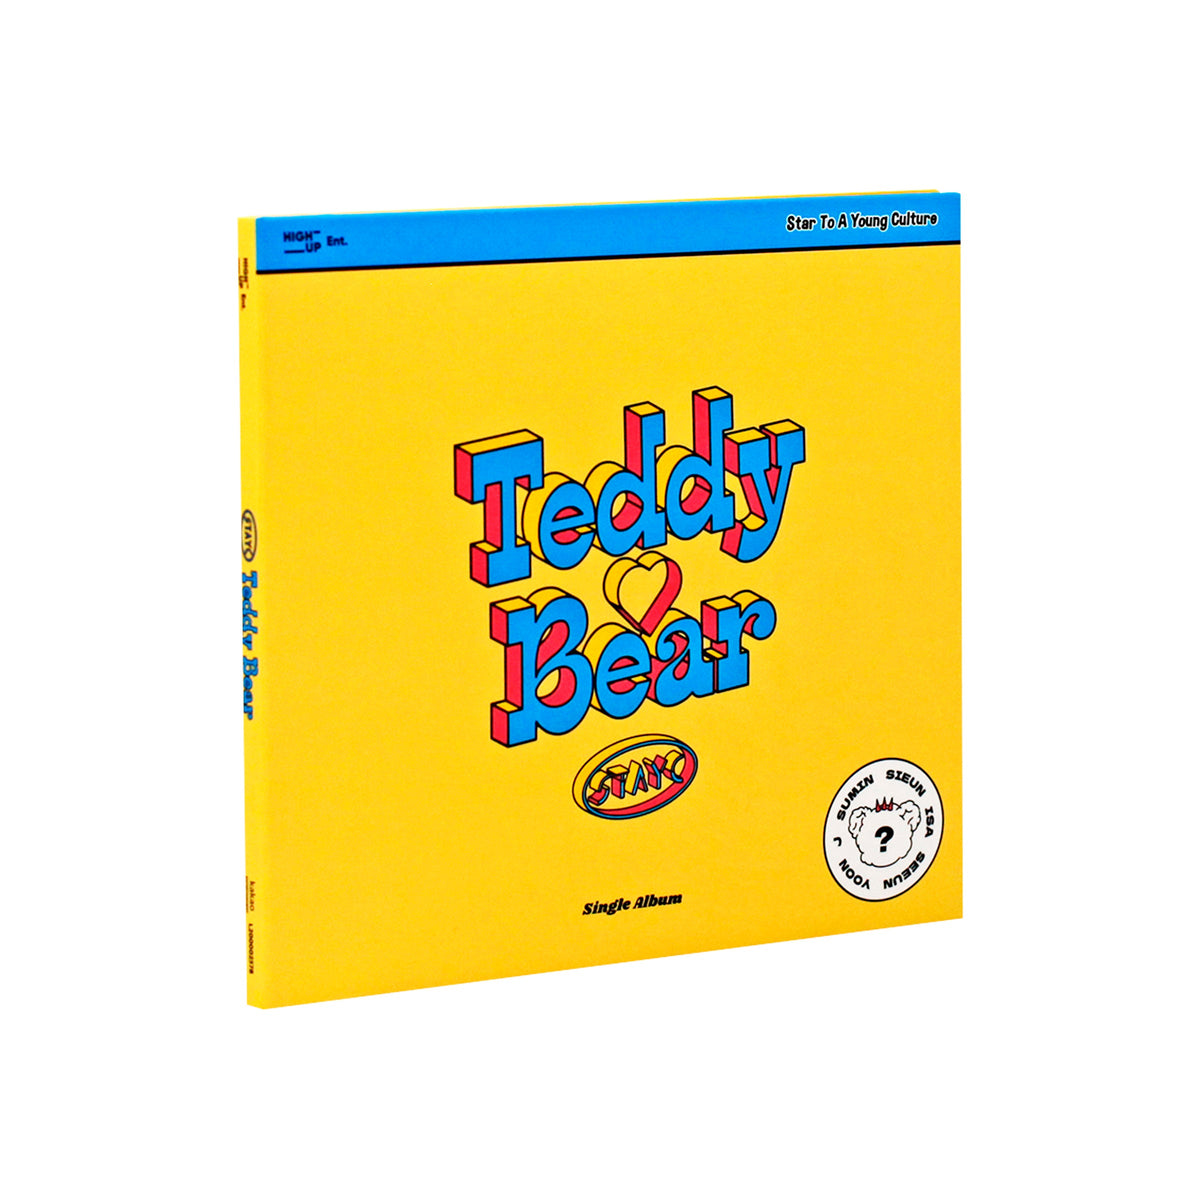 STAYC Teddy Bear 4th Single Album Digipack Version main product image 2